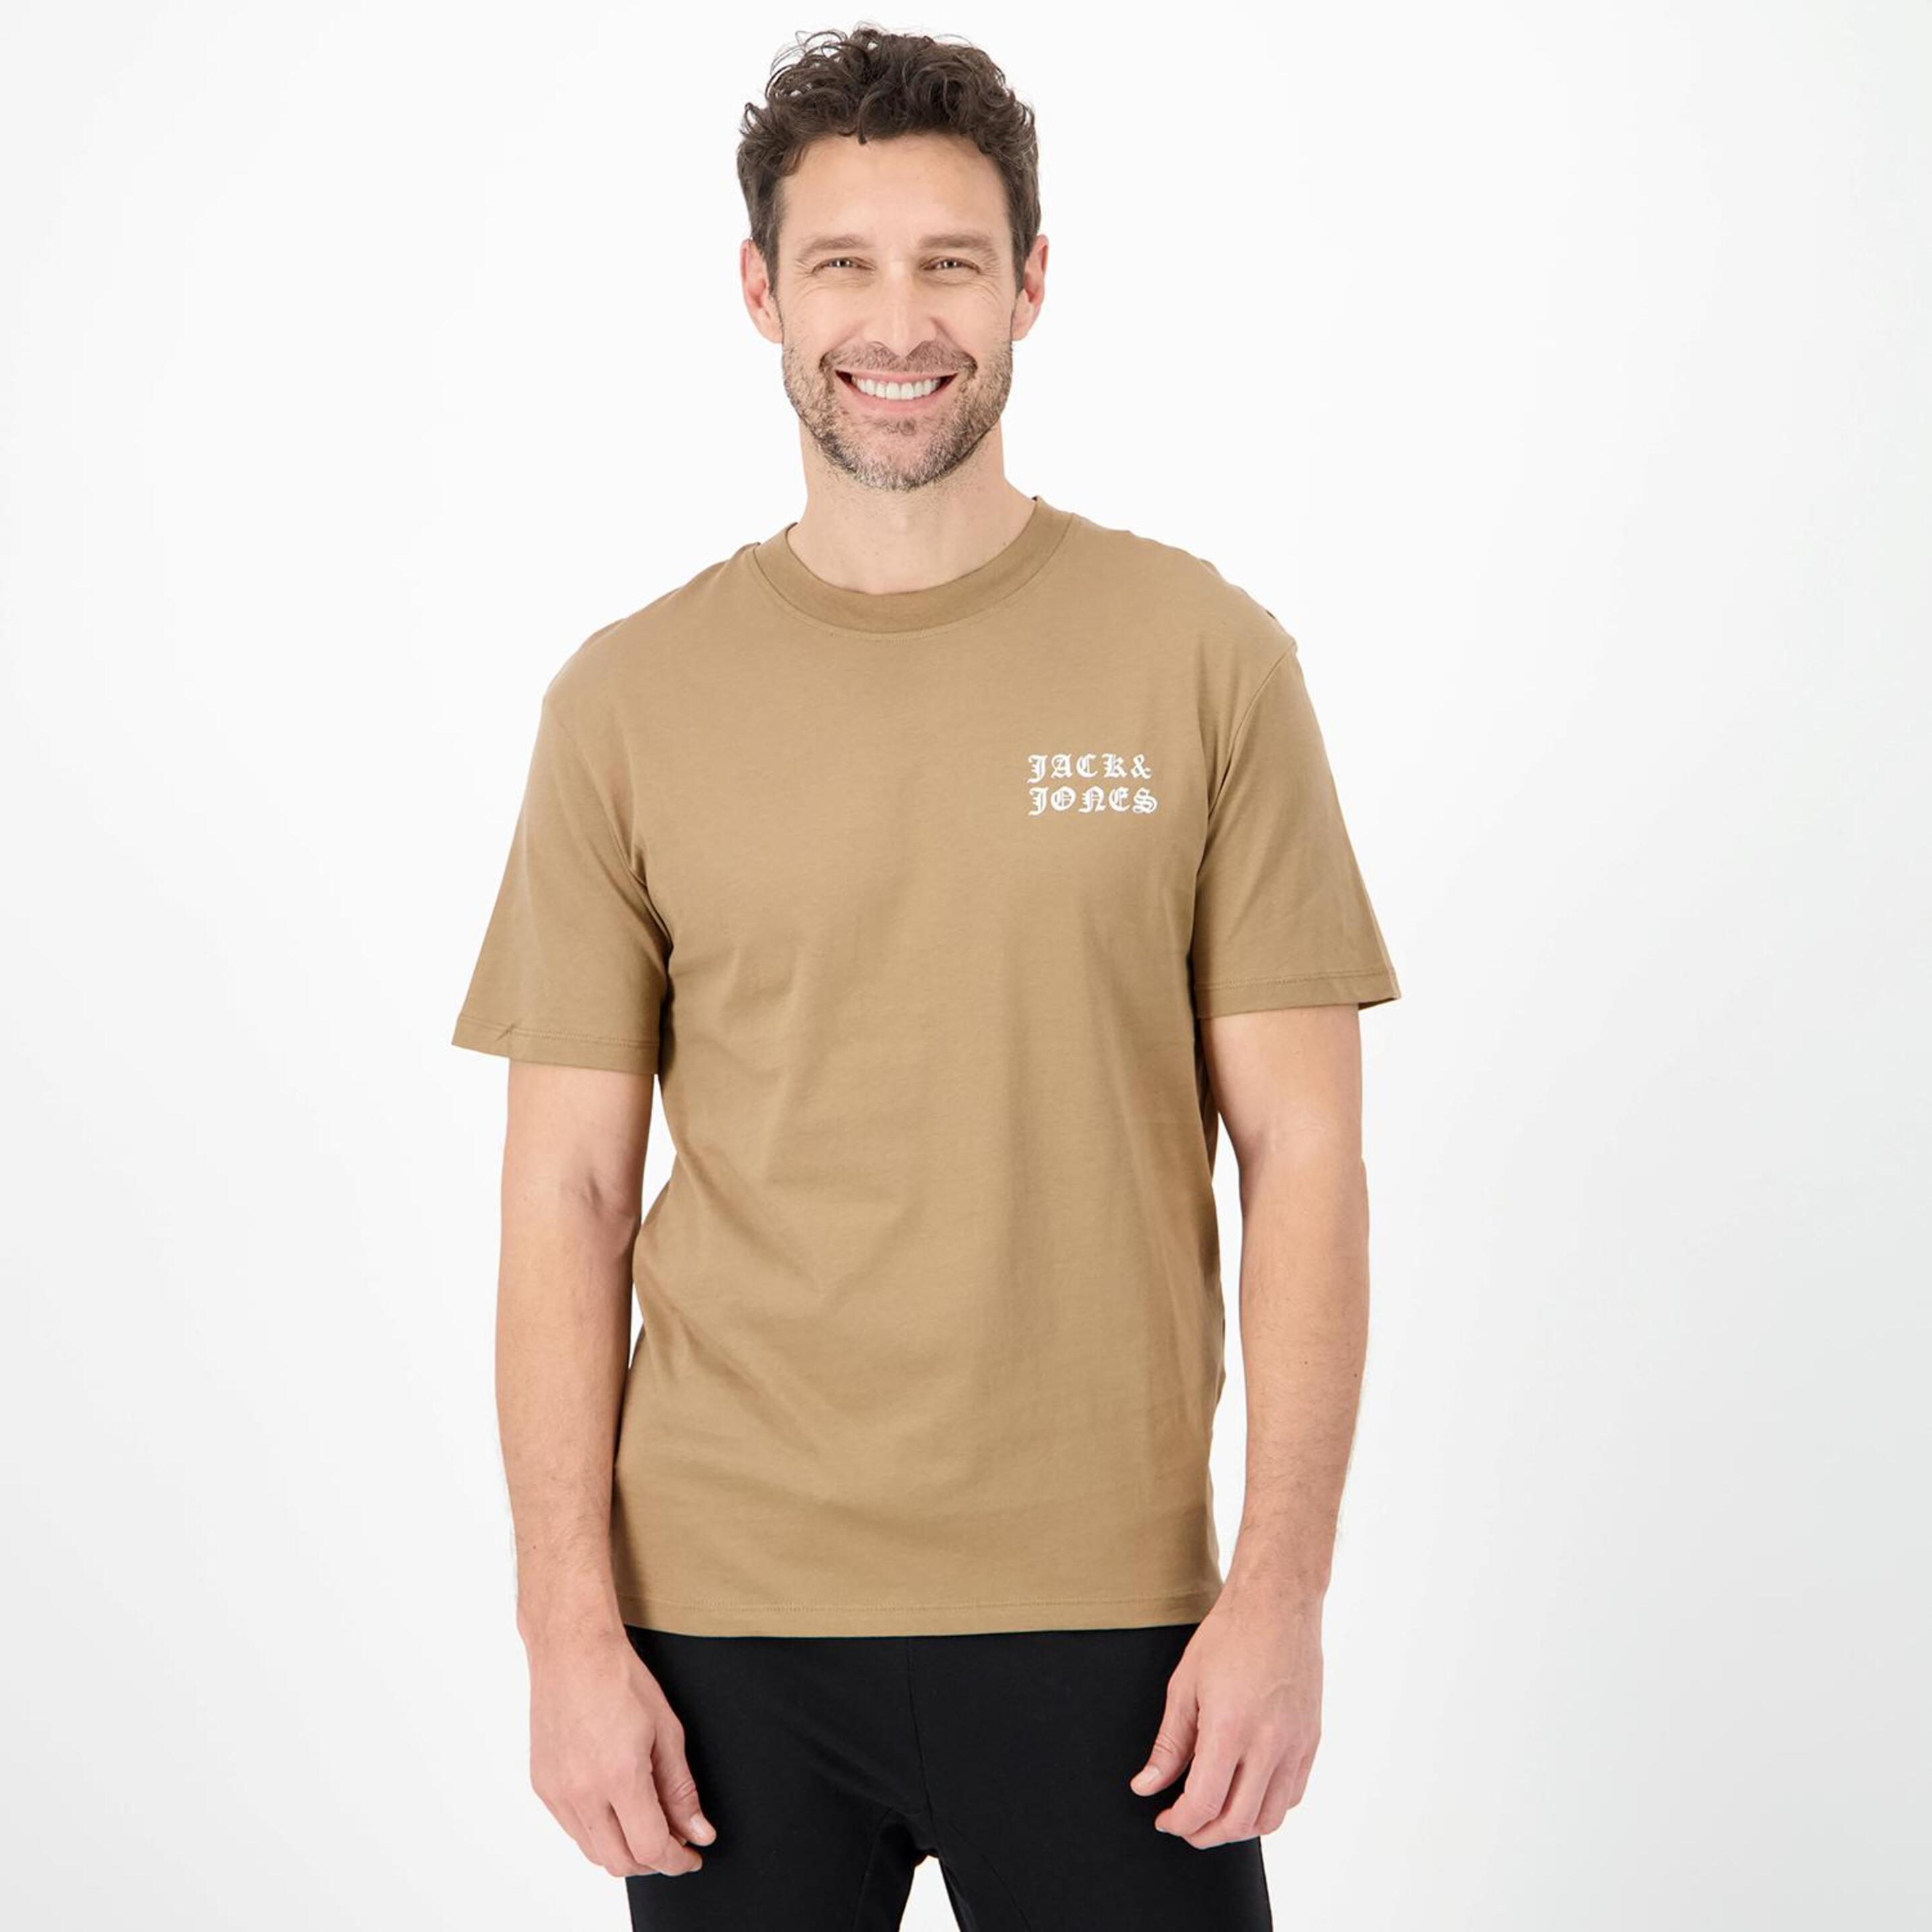 Jack & Jones Especial Logo - marron - Camiseta Hombre